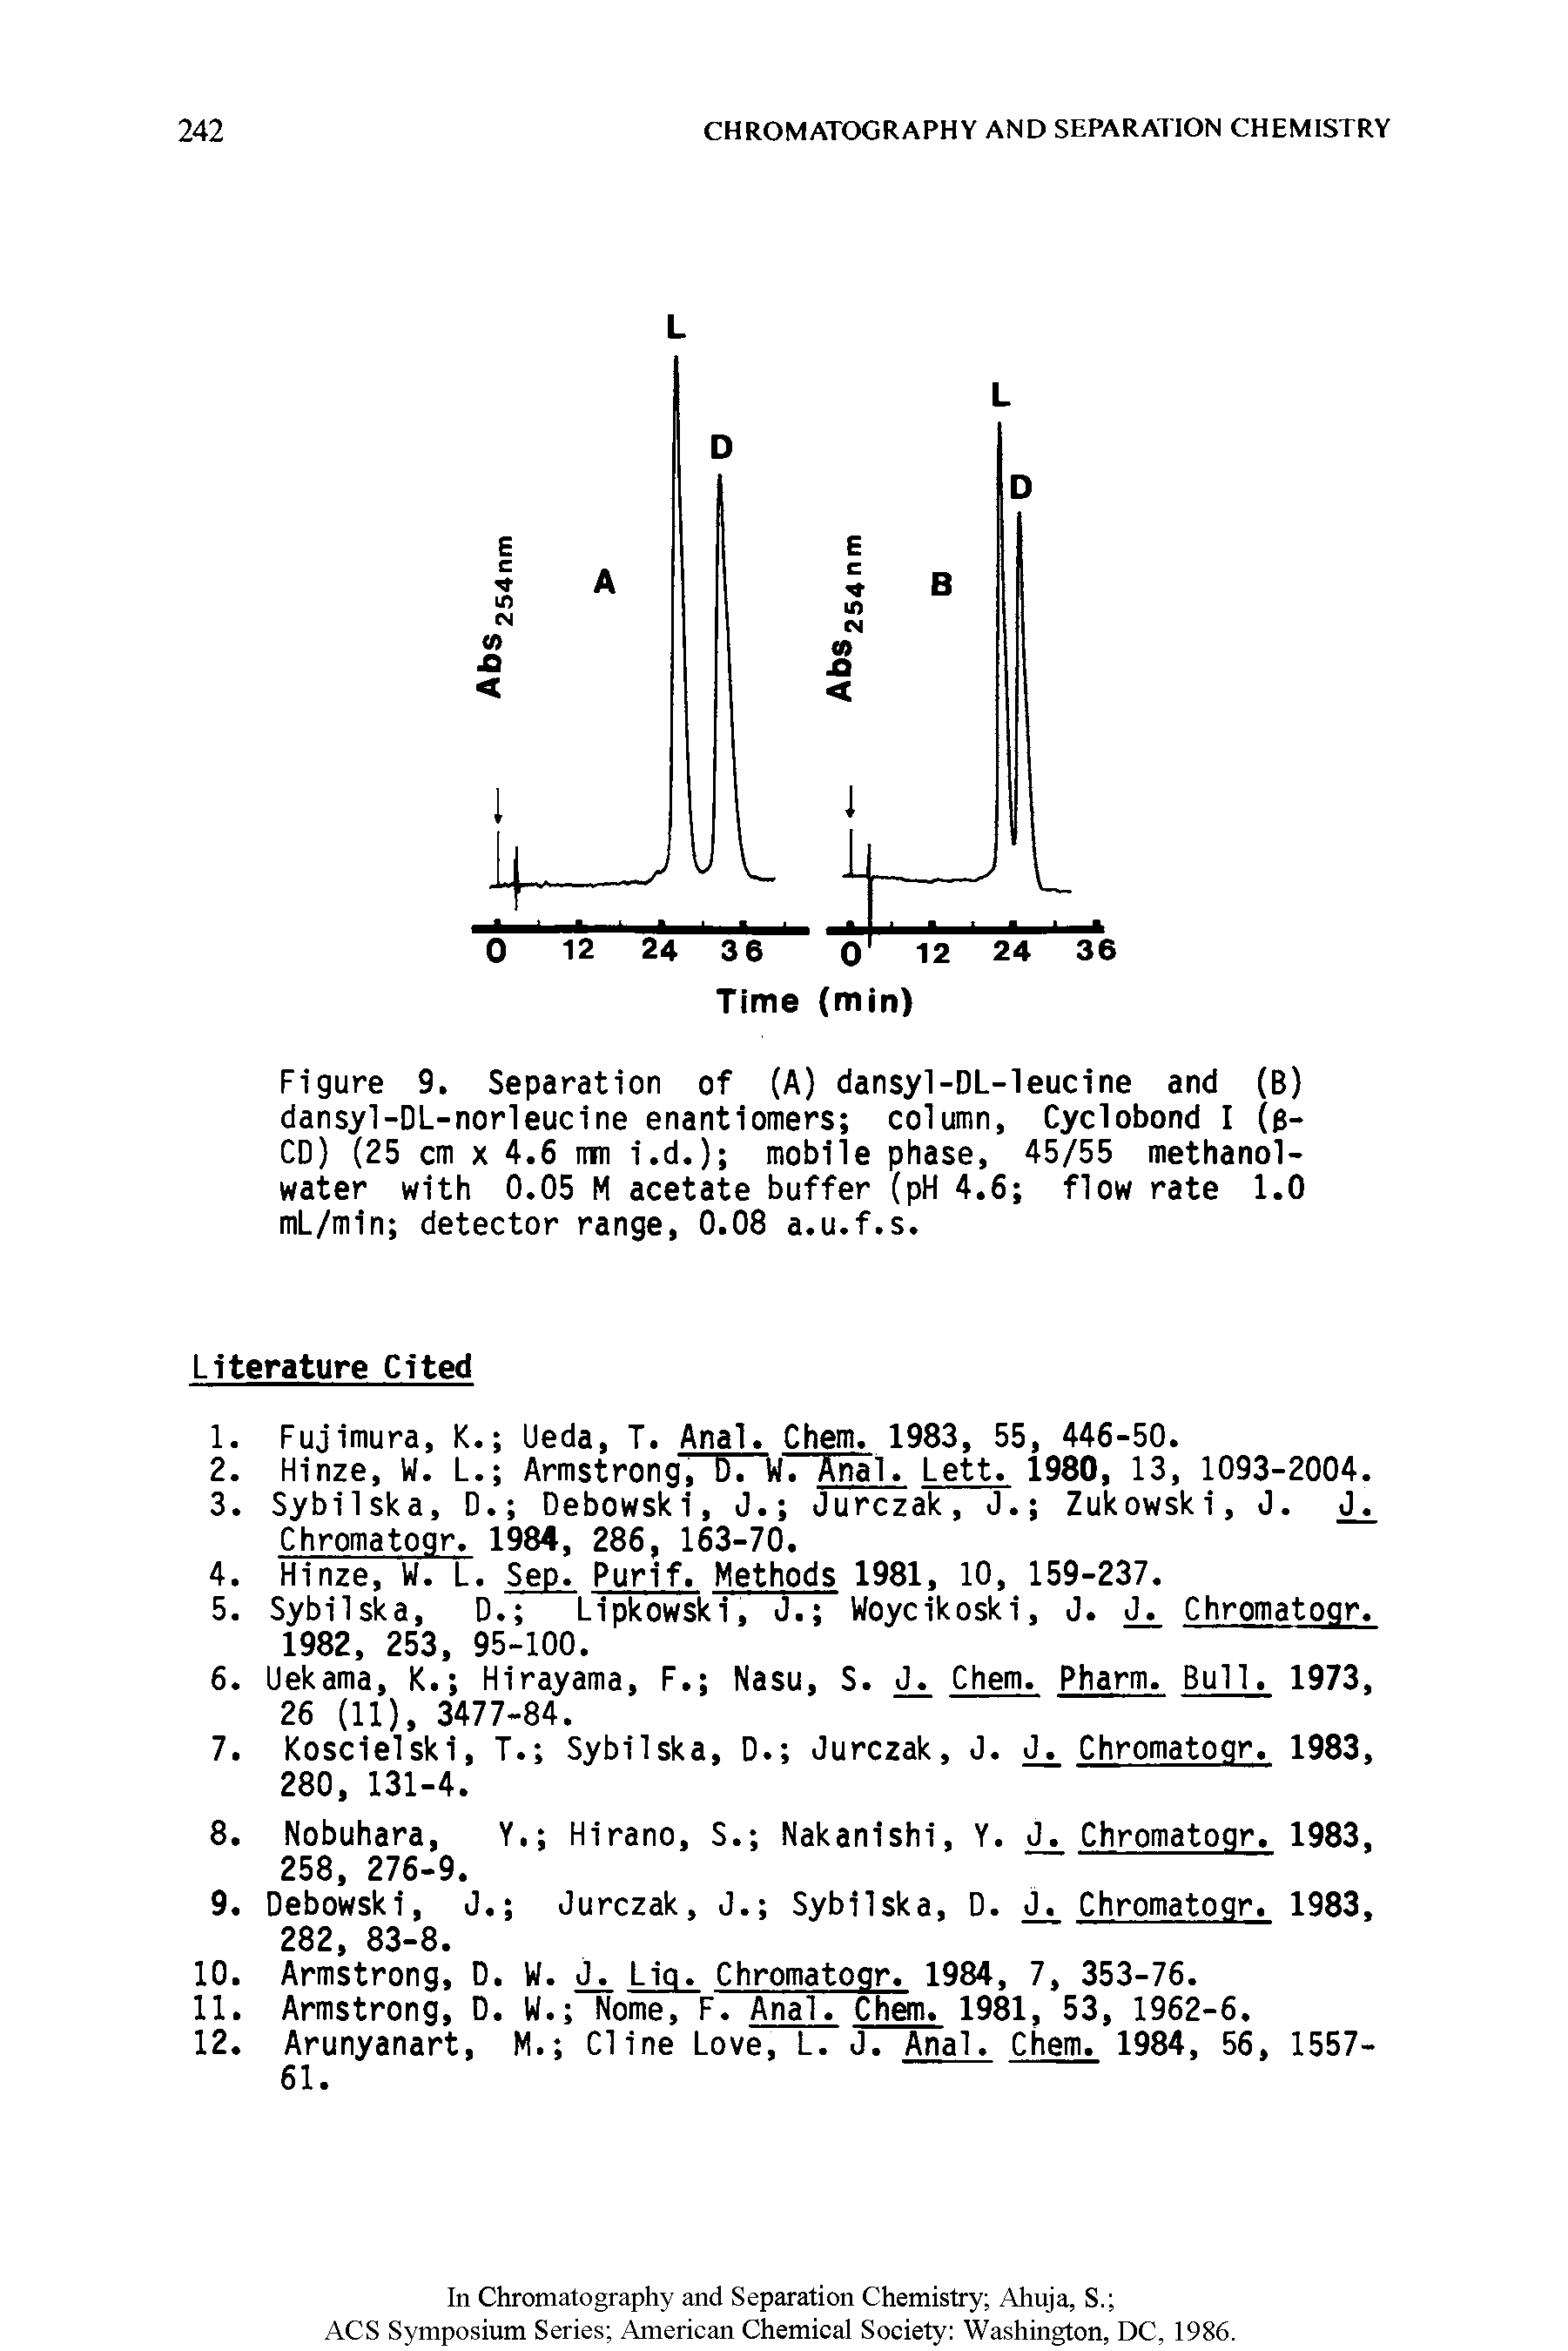 Figure 9. Separation of (A) dansyl-DL-leucine and (B) dansyl-DL-norleucine enantiomers column, Cyclobond I ( -CD) (25 cm X 4.6 nm i.d.) mobile phase, 45/55 methanol-water with 0.05 M acetate buffer (pH 4.6 flow rate 1.0 mL/min detector range, 0.08 a.u.f.s.